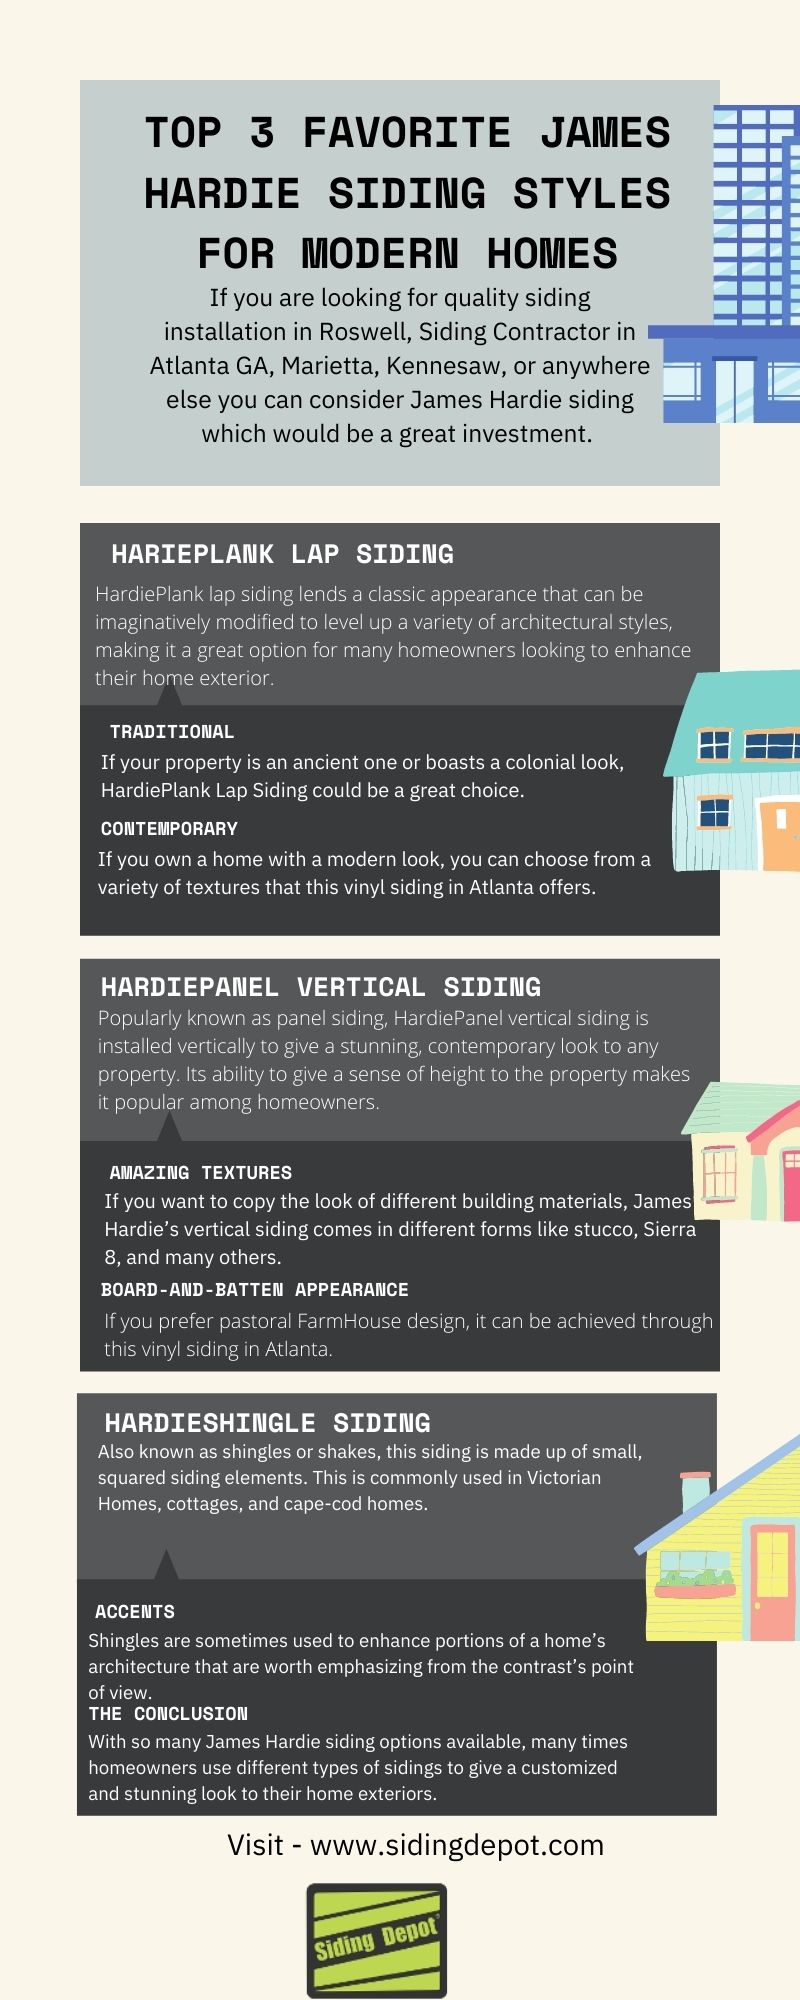 Top 3 Favorite James Hardie Siding Styles for Modern Homes